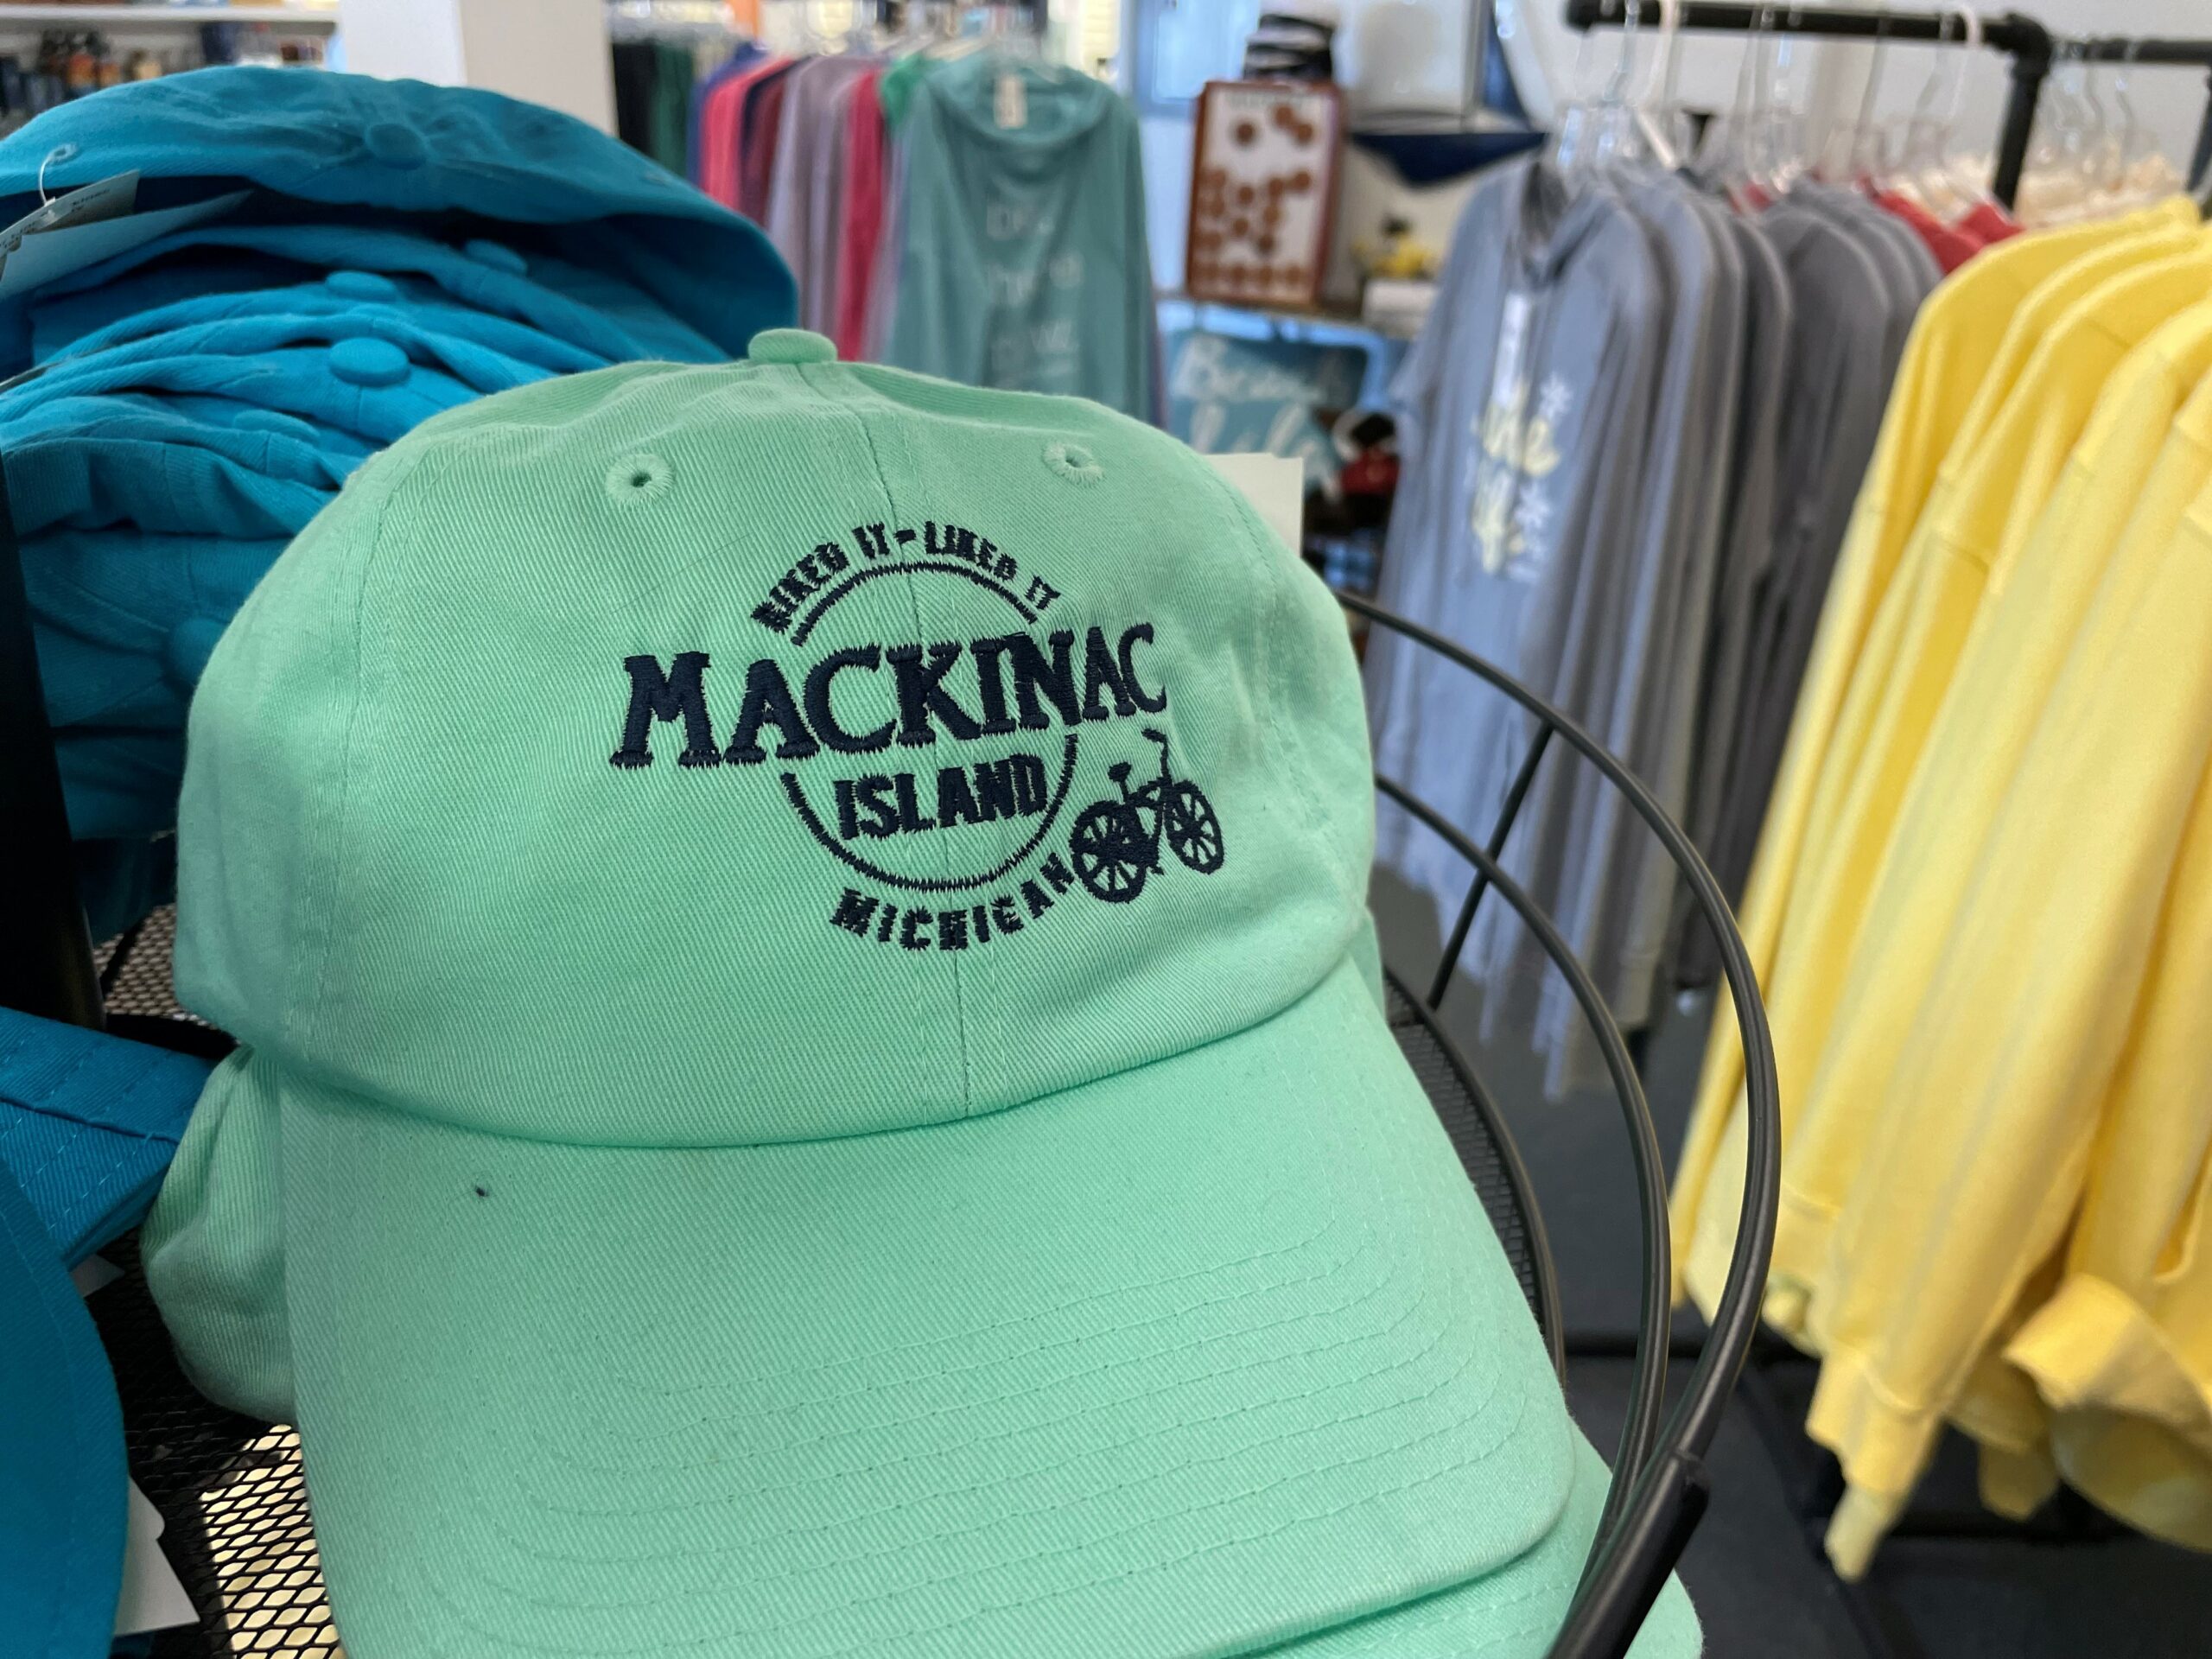 Mackinac Island Ferry Company Ship Store